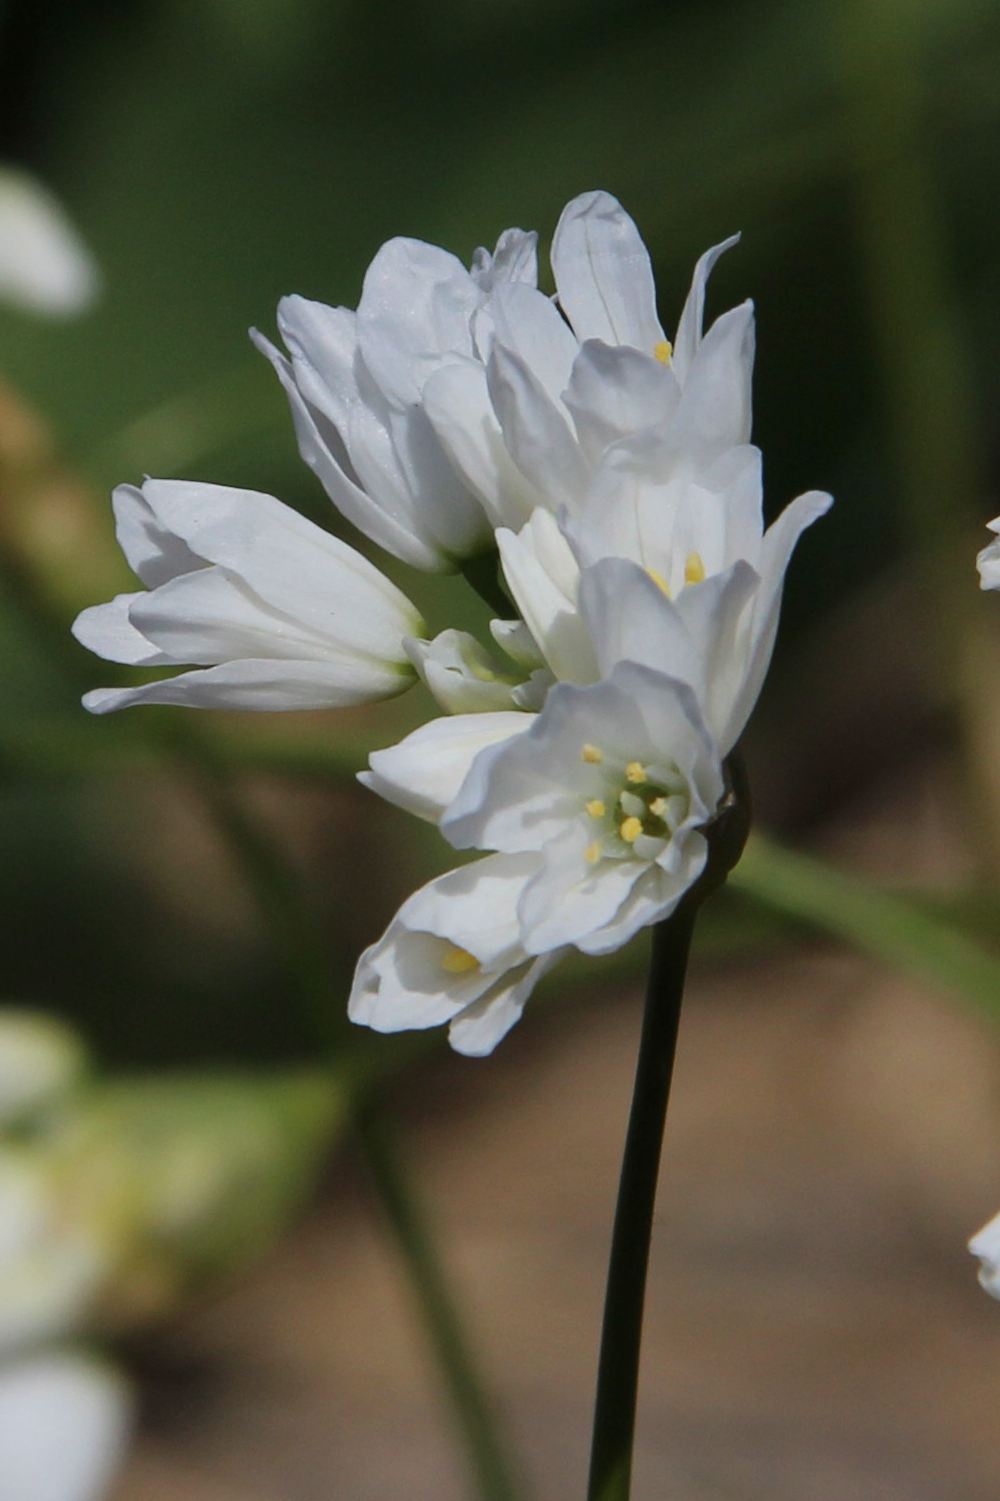 Allium zebdanense